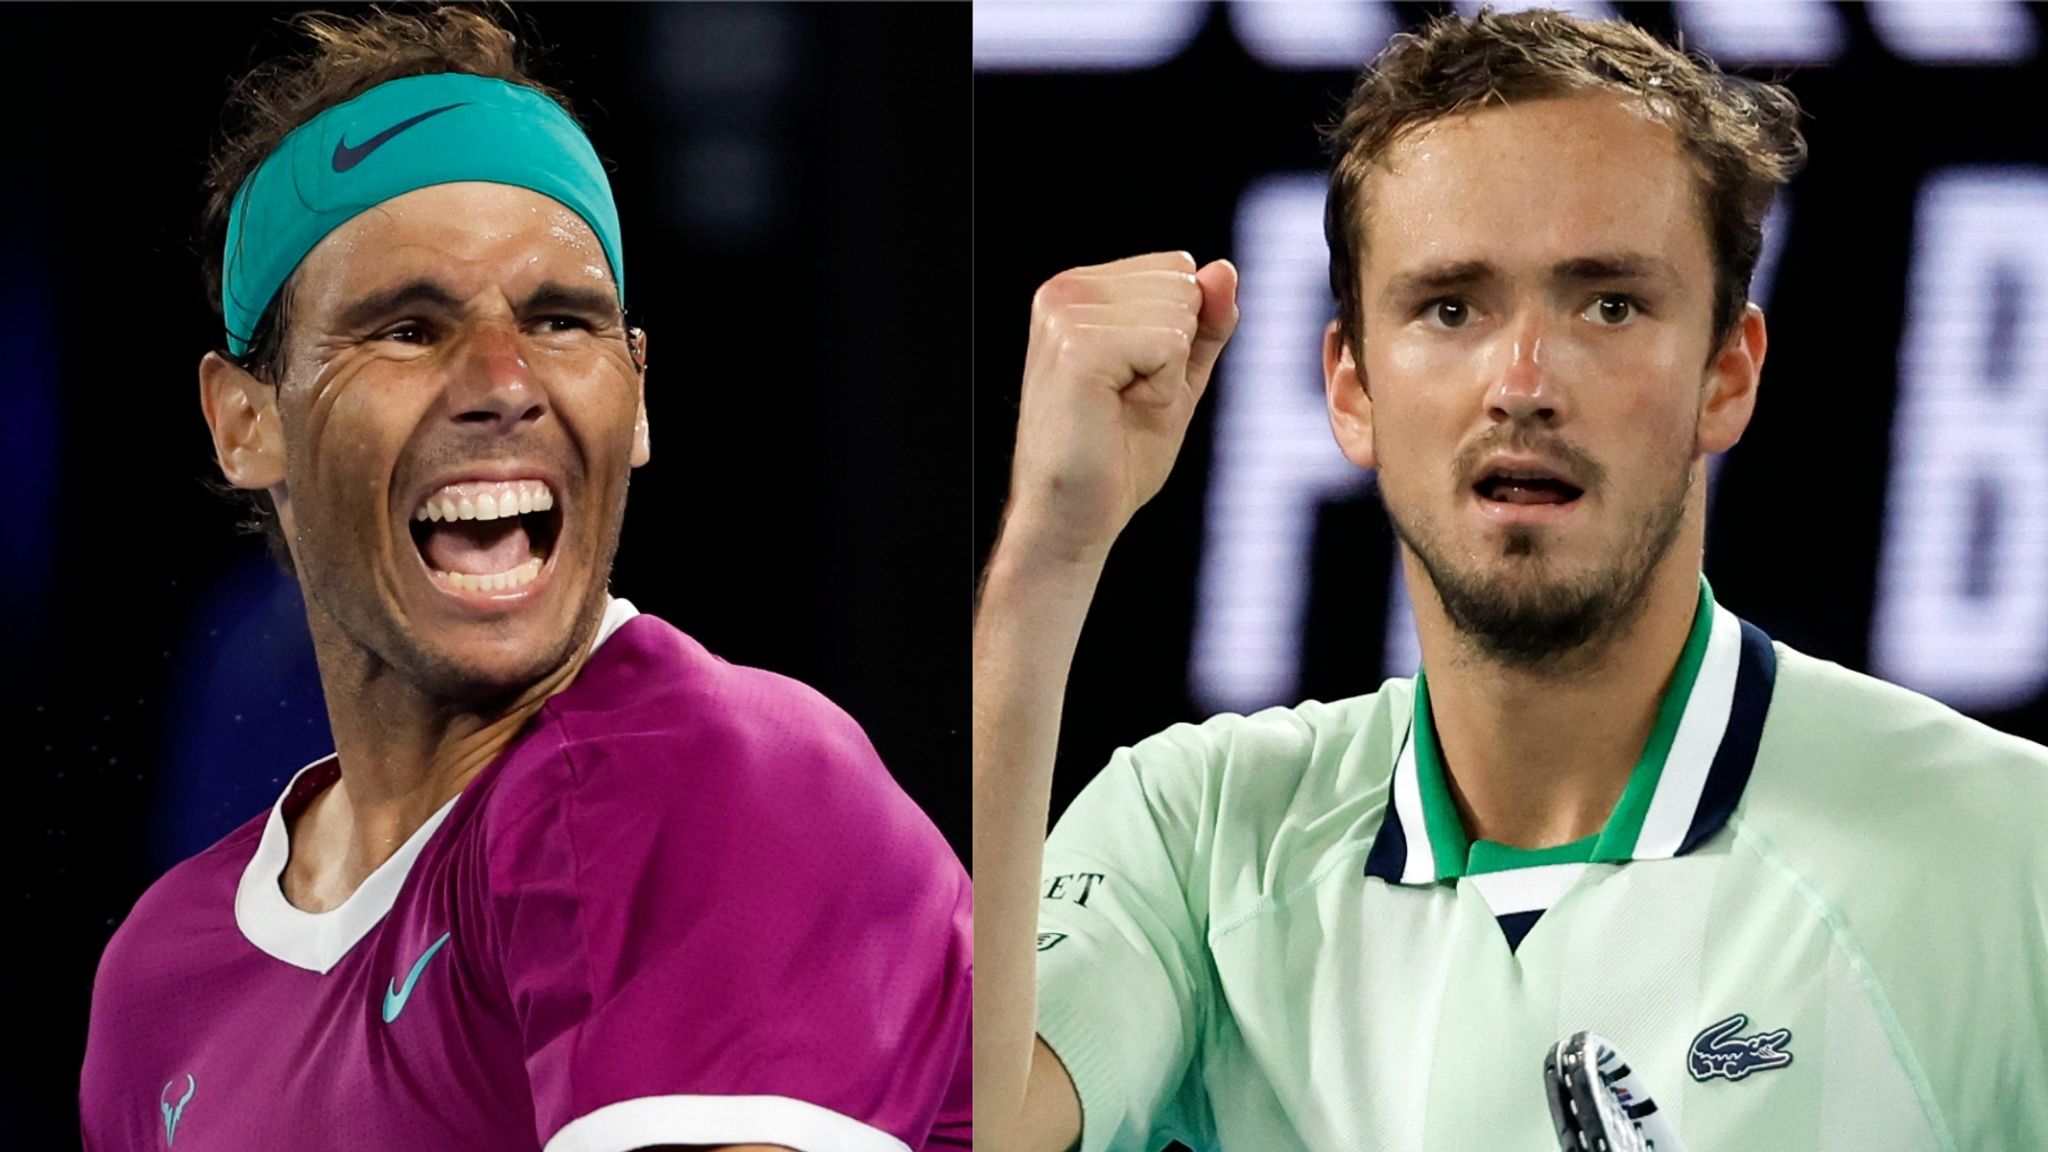 Australian Open Rafael Nadal takes on Daniil Medvedev in final with Grand Slam history on the line Tennis News Sky Sports